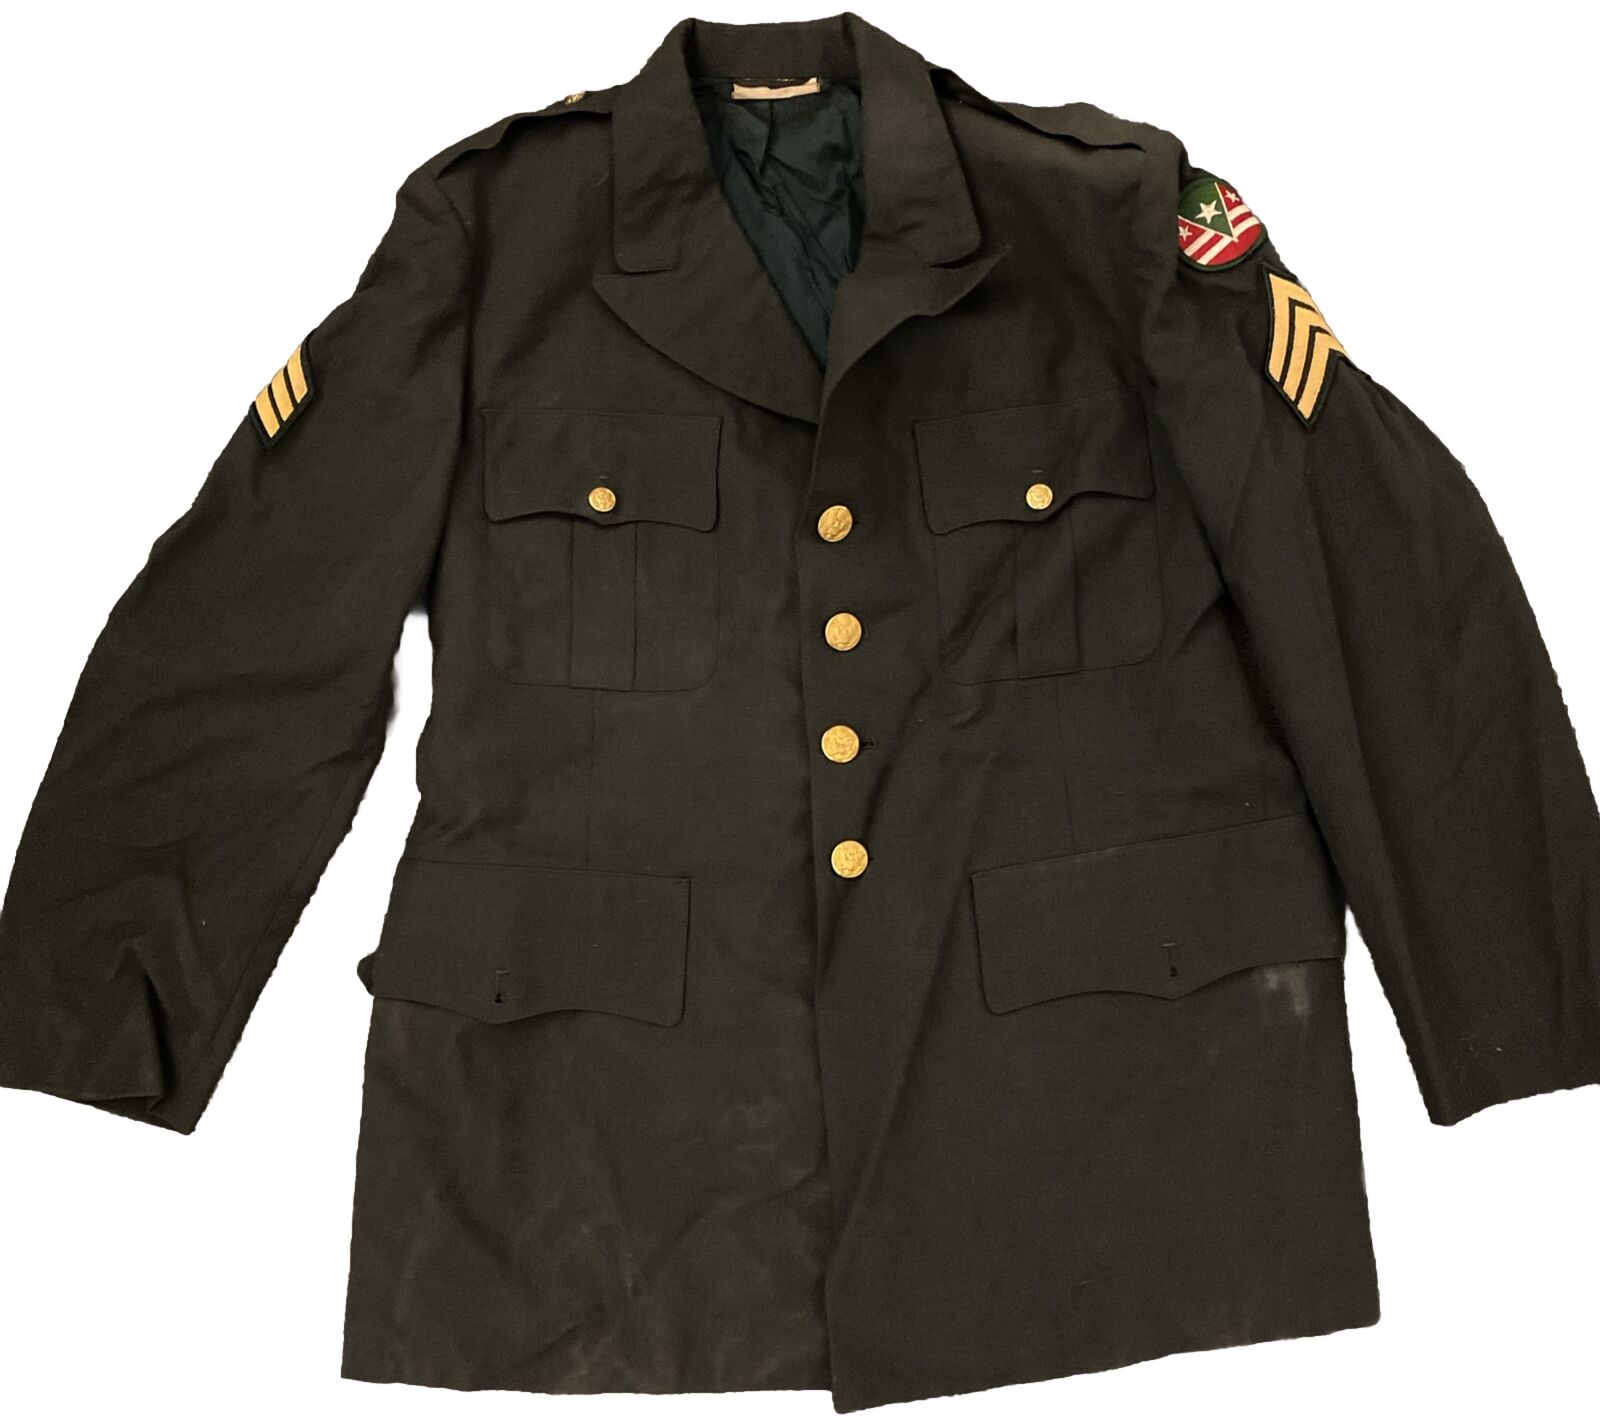 Vintage US Army Green Dress Jacket Coat Men’s Size 44 R